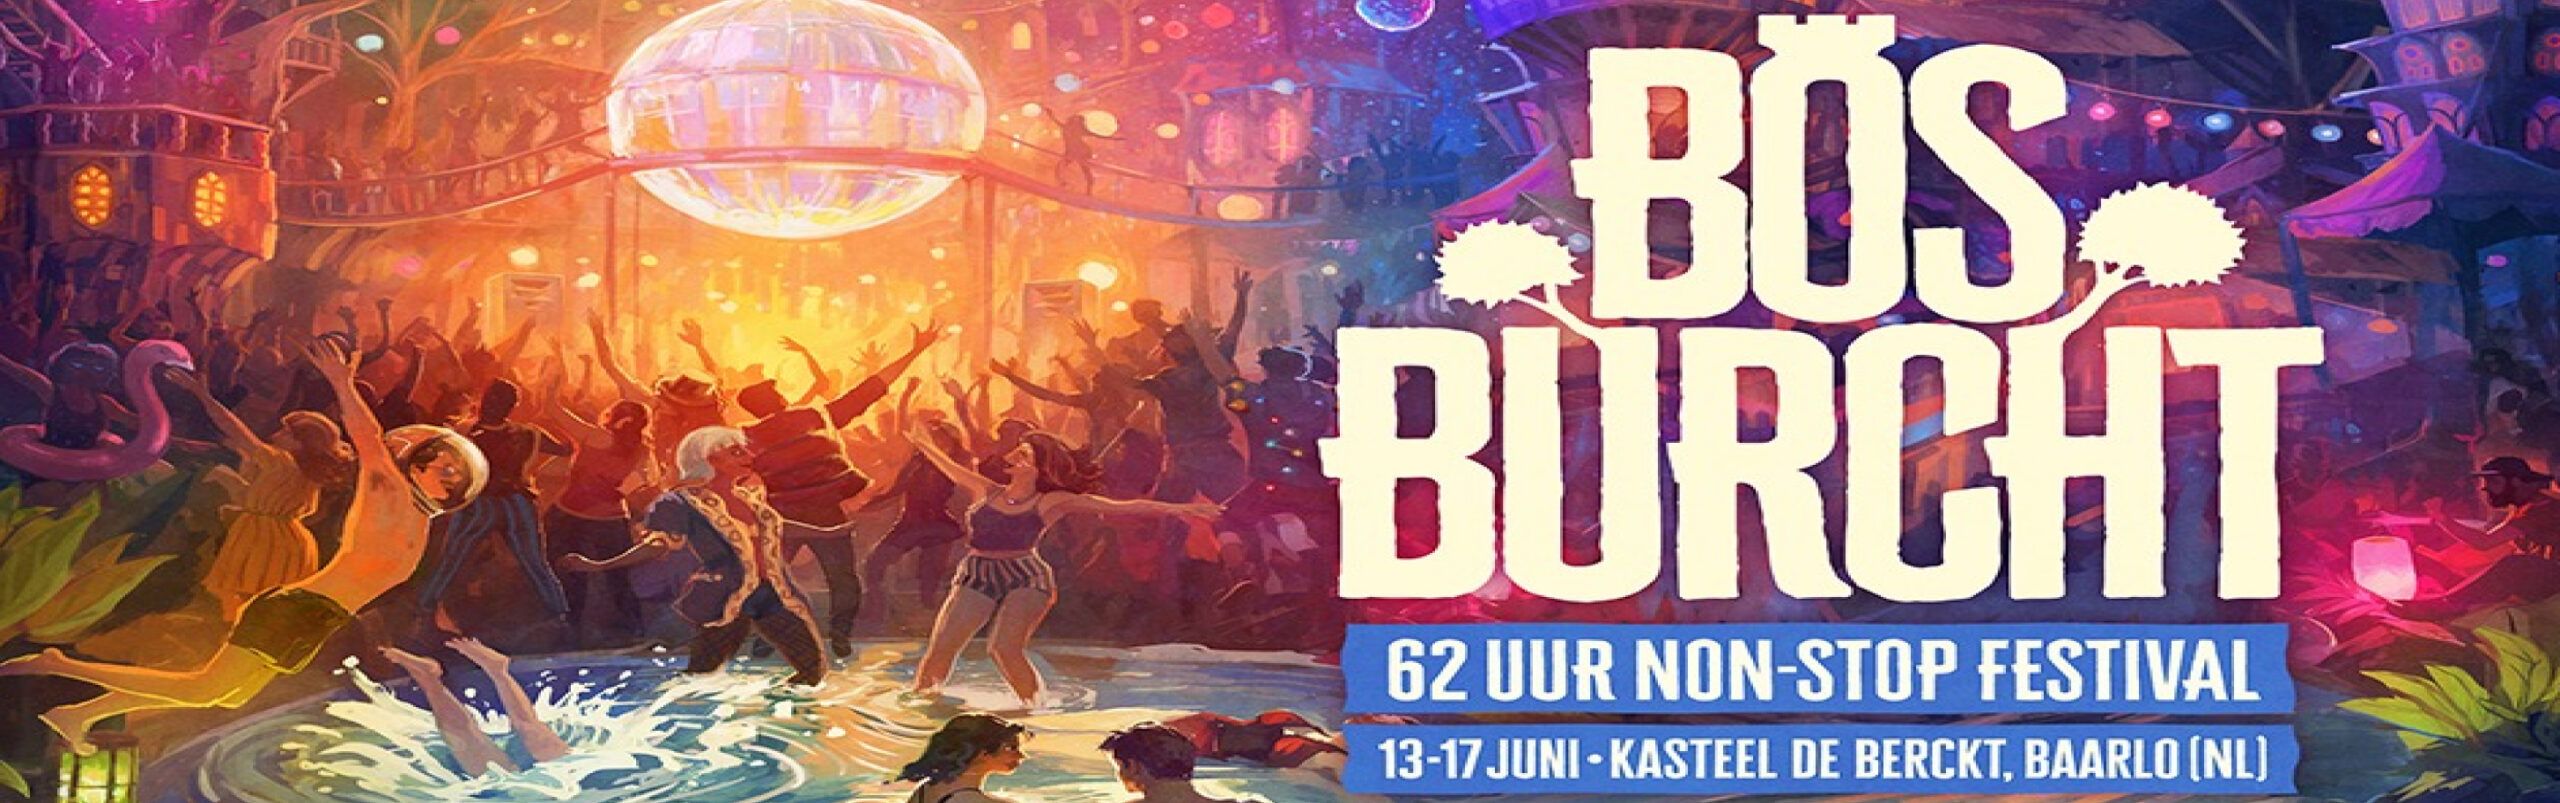 Bosburcht Festival header